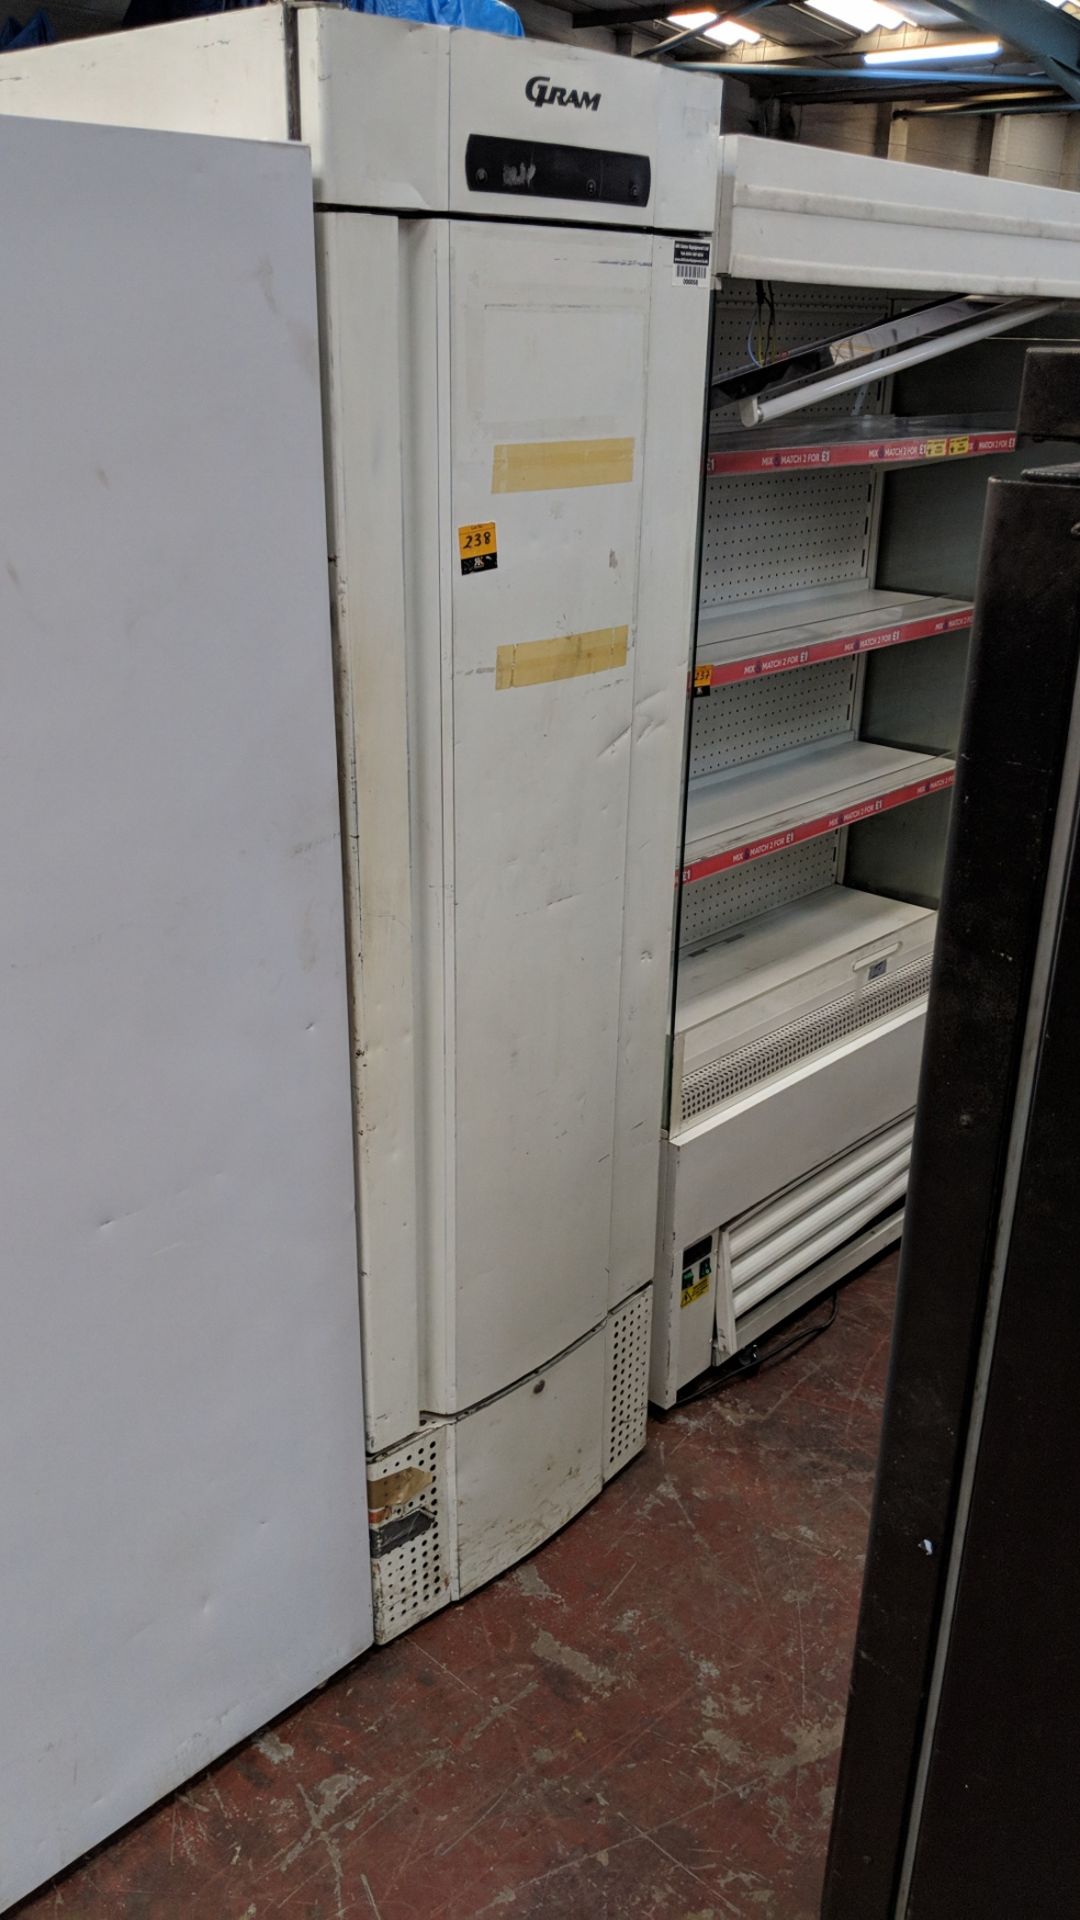 Gram white tall fridge, model MIDI K 425 IMPORTANT: Please remember goods successfully bid upon must